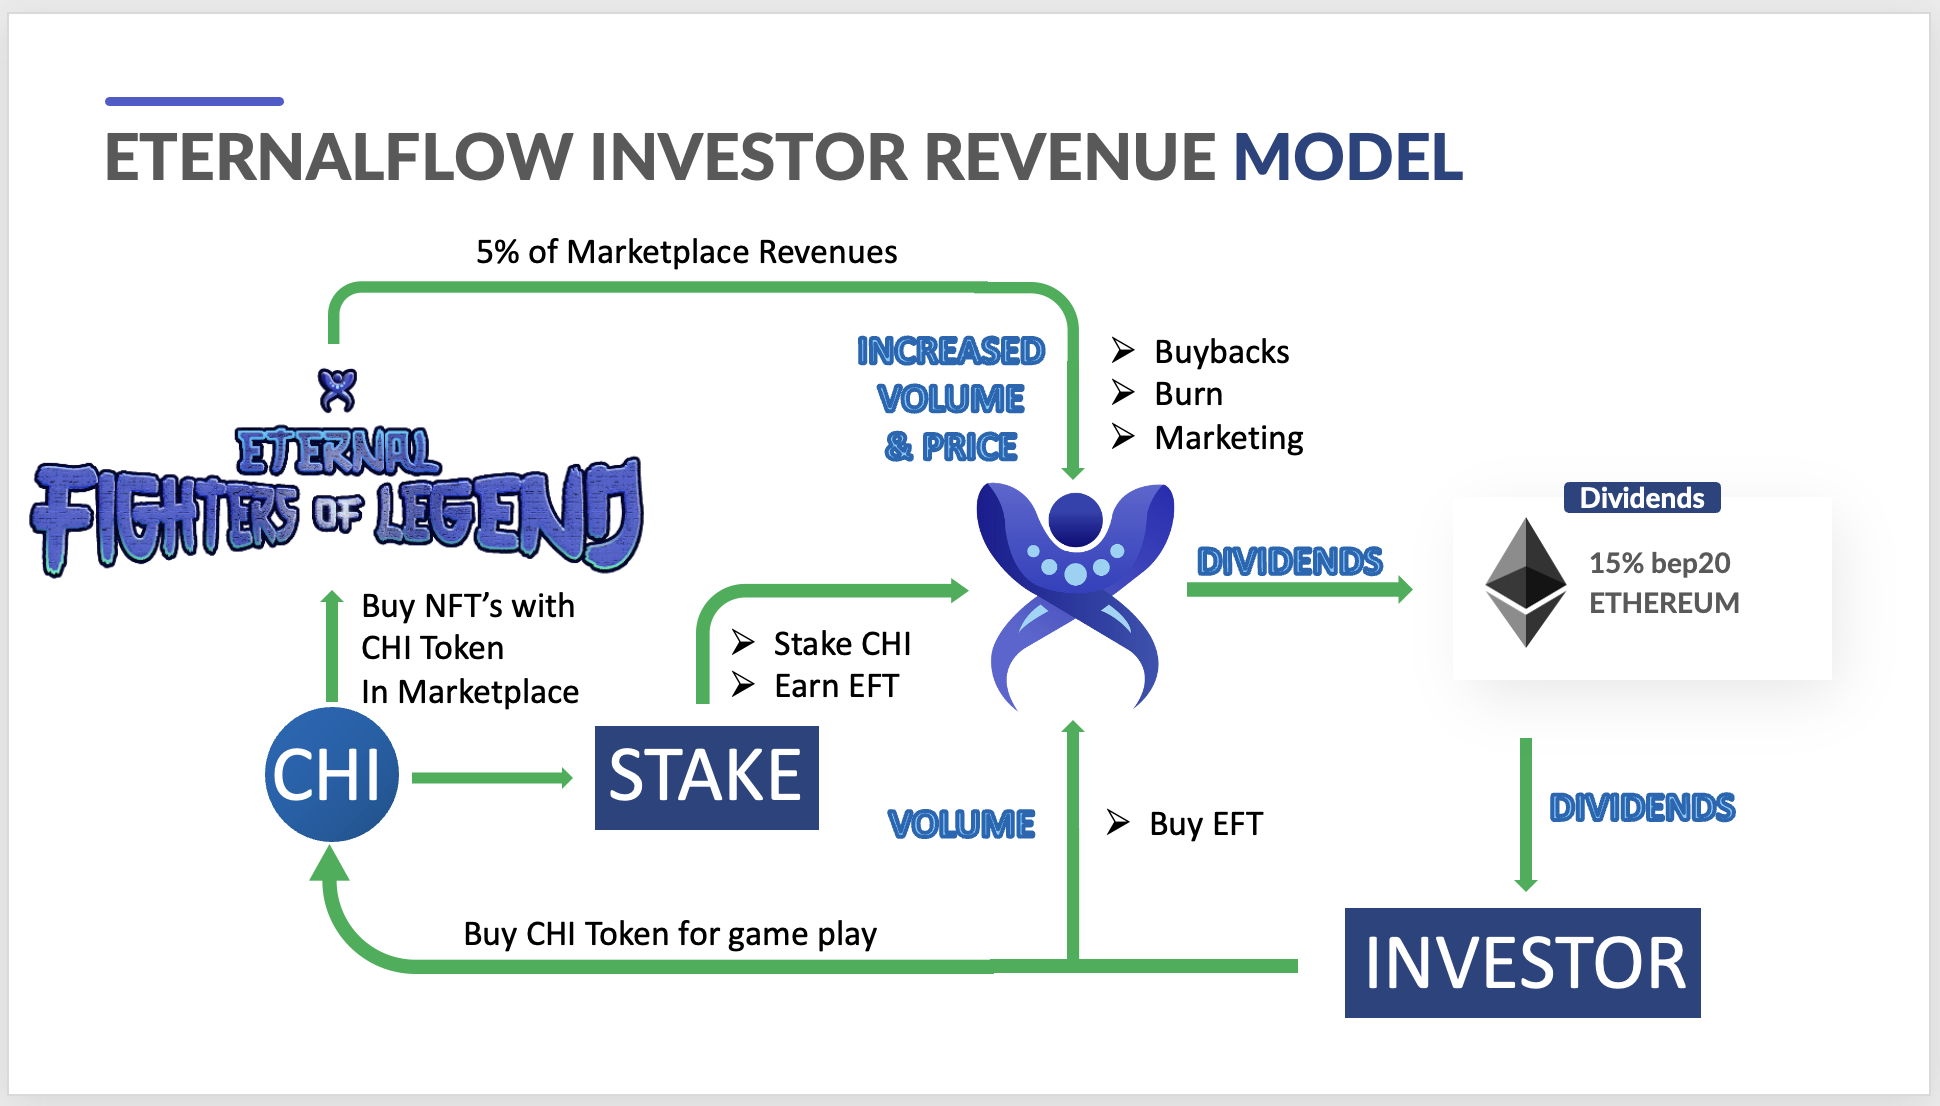 EternalFlow Investor Revenue Model. For more information please visit the website. 